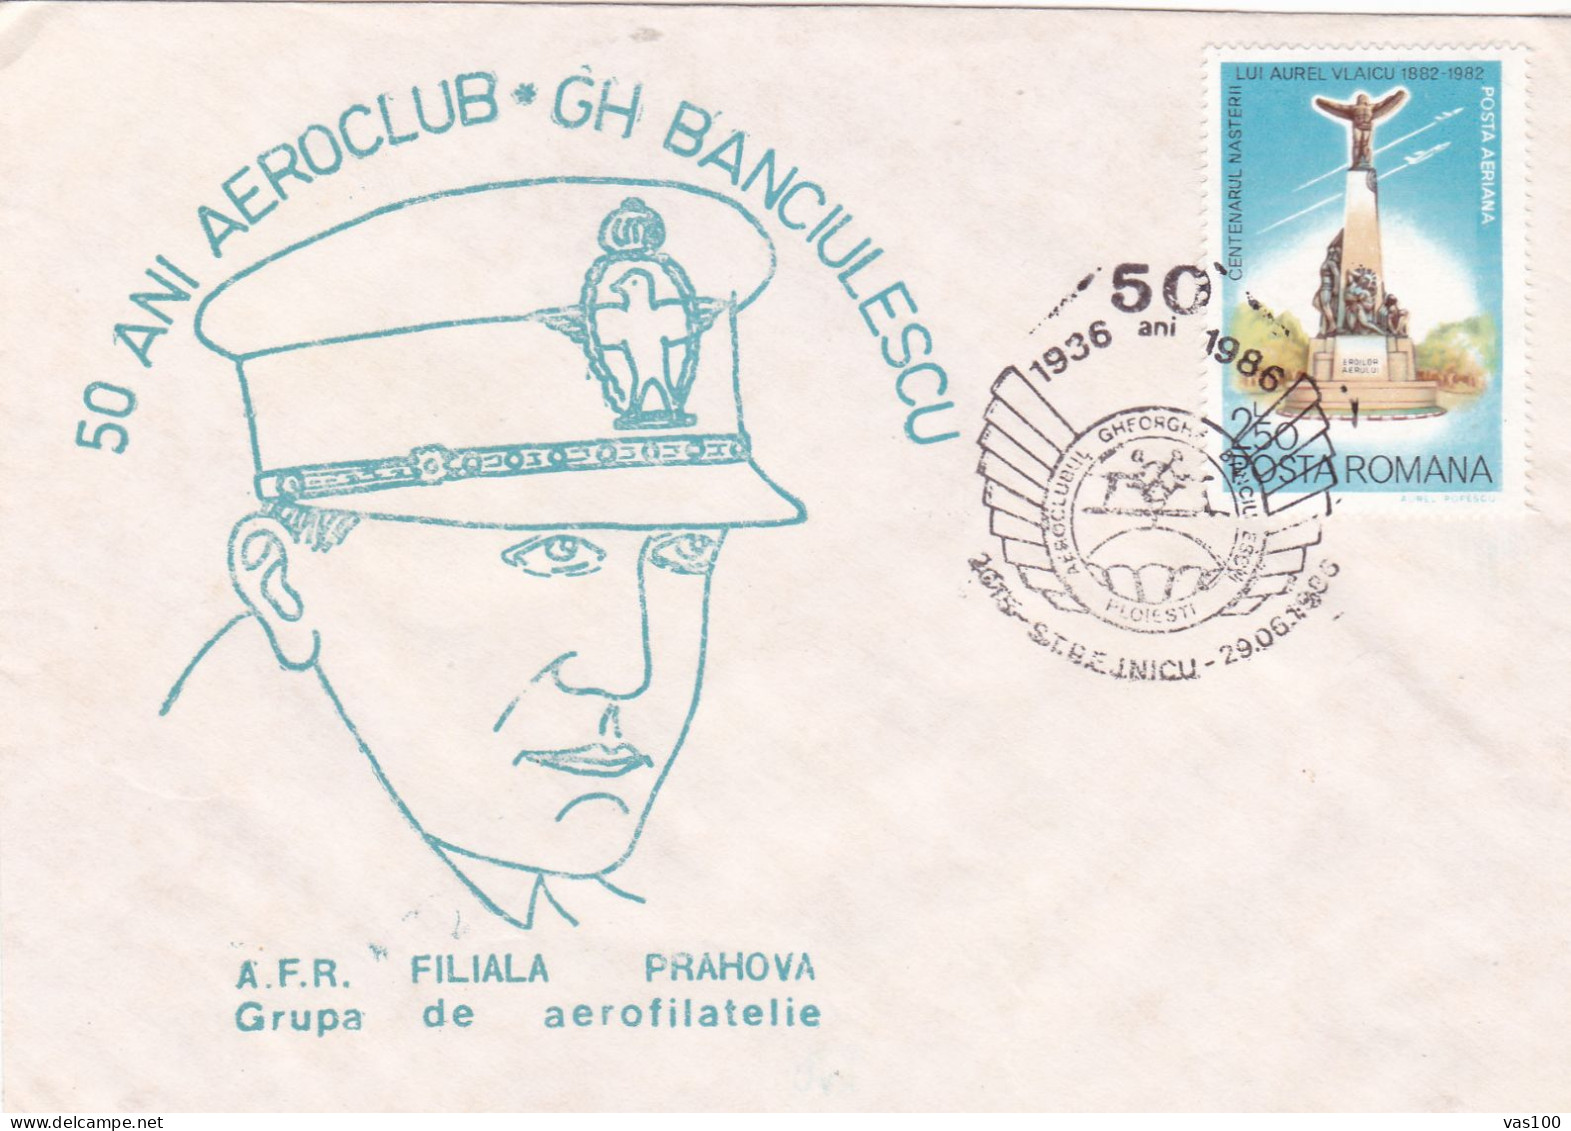 AVIATION CAPTAIN GH BANCIULESCU COVERS   STATIONERY 1986 ROMANIA - Briefe U. Dokumente